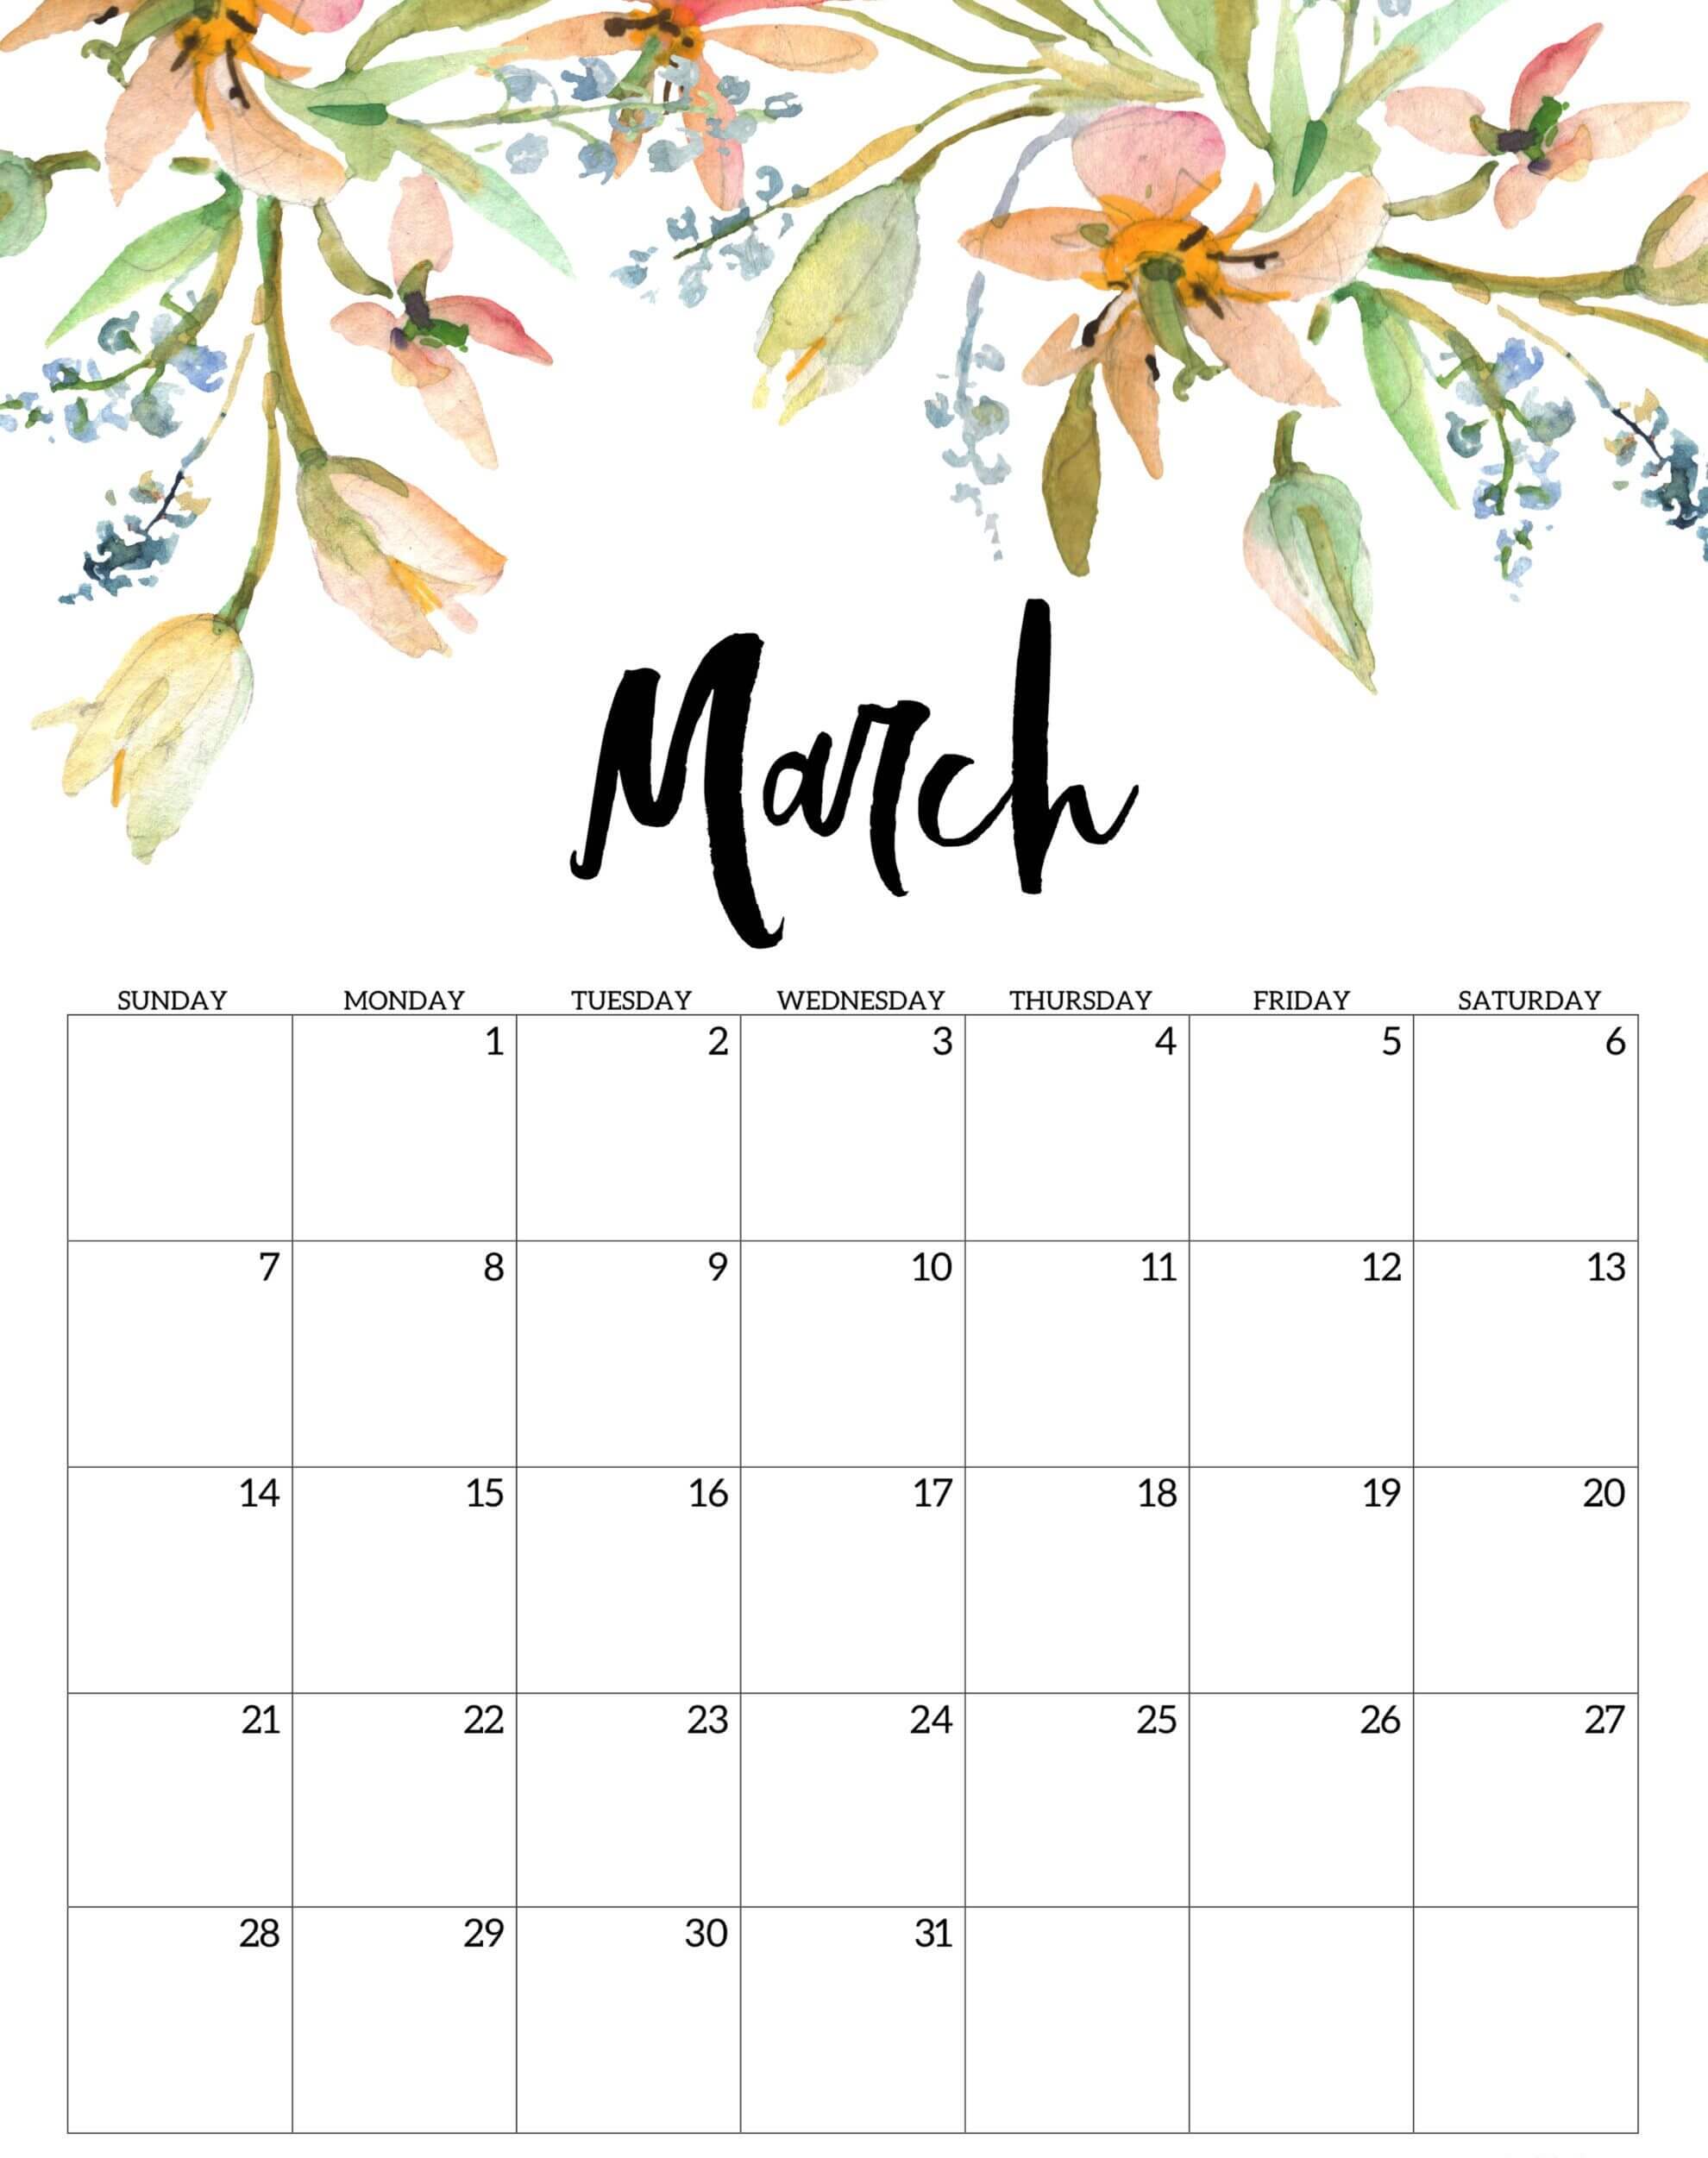 March Calendar 2021 Iphone Wallpaper Image ID 13